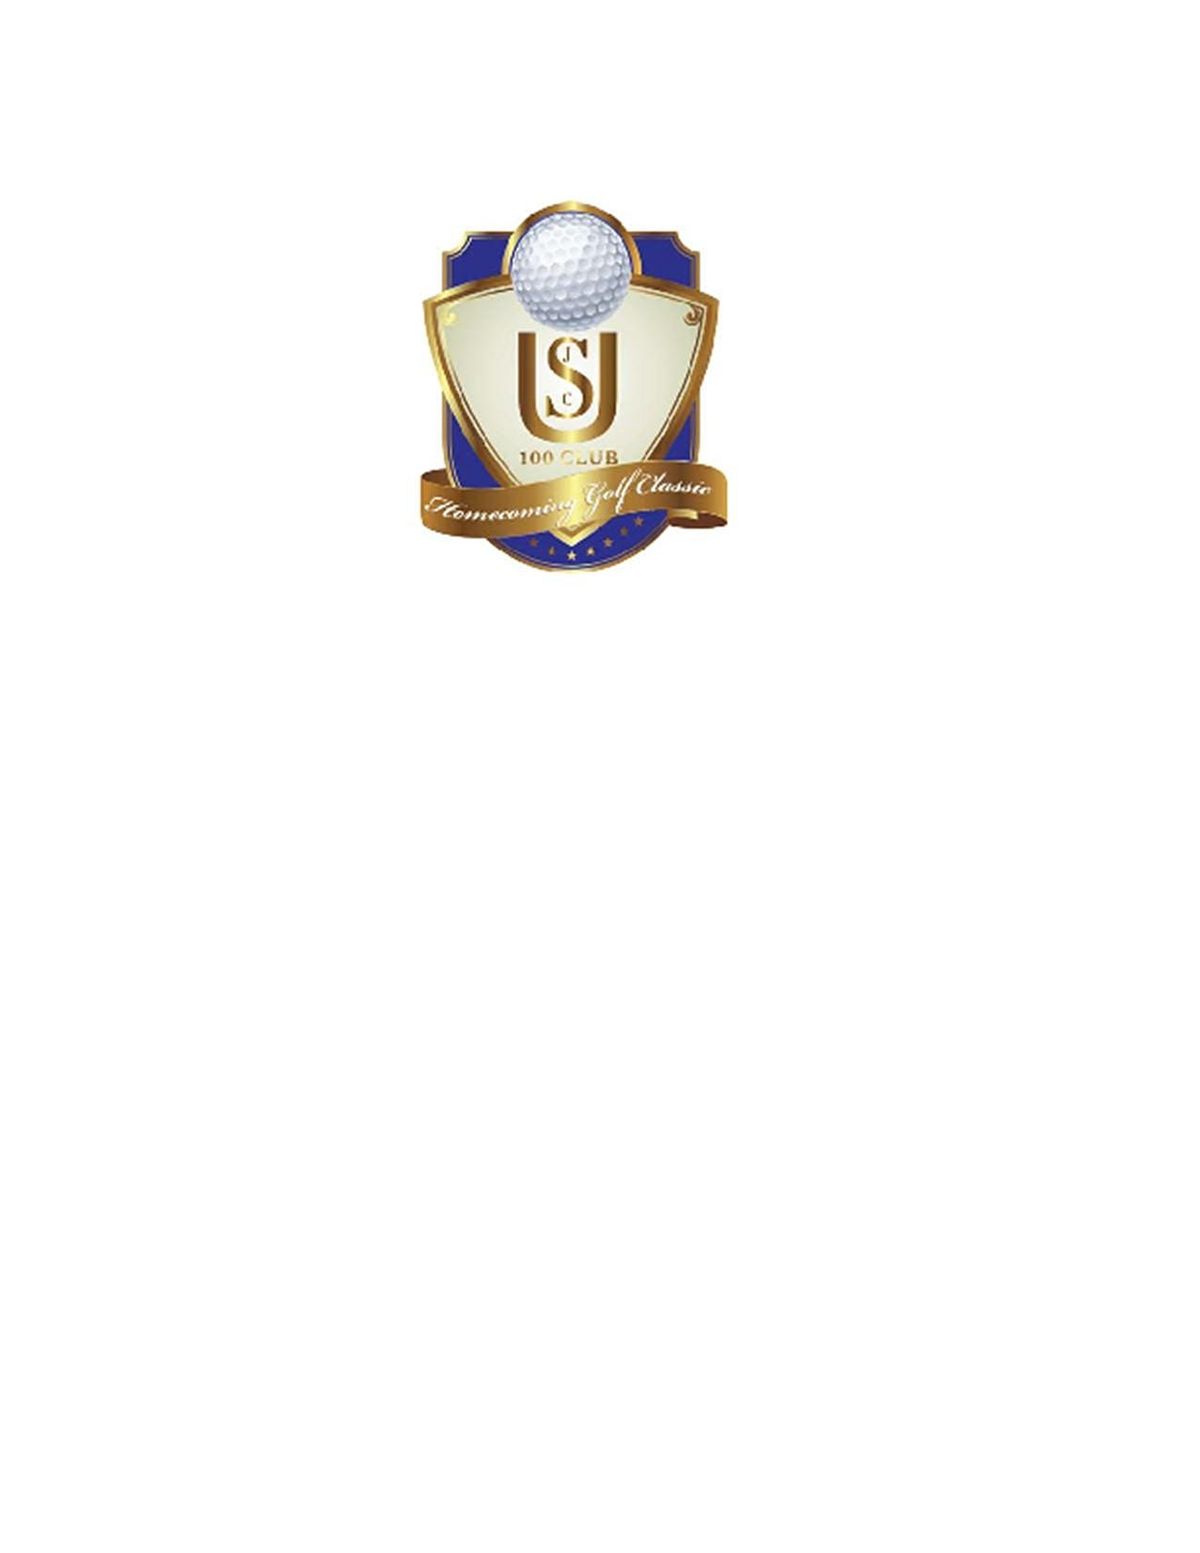 JCSU 100 Club  Golf Tournament